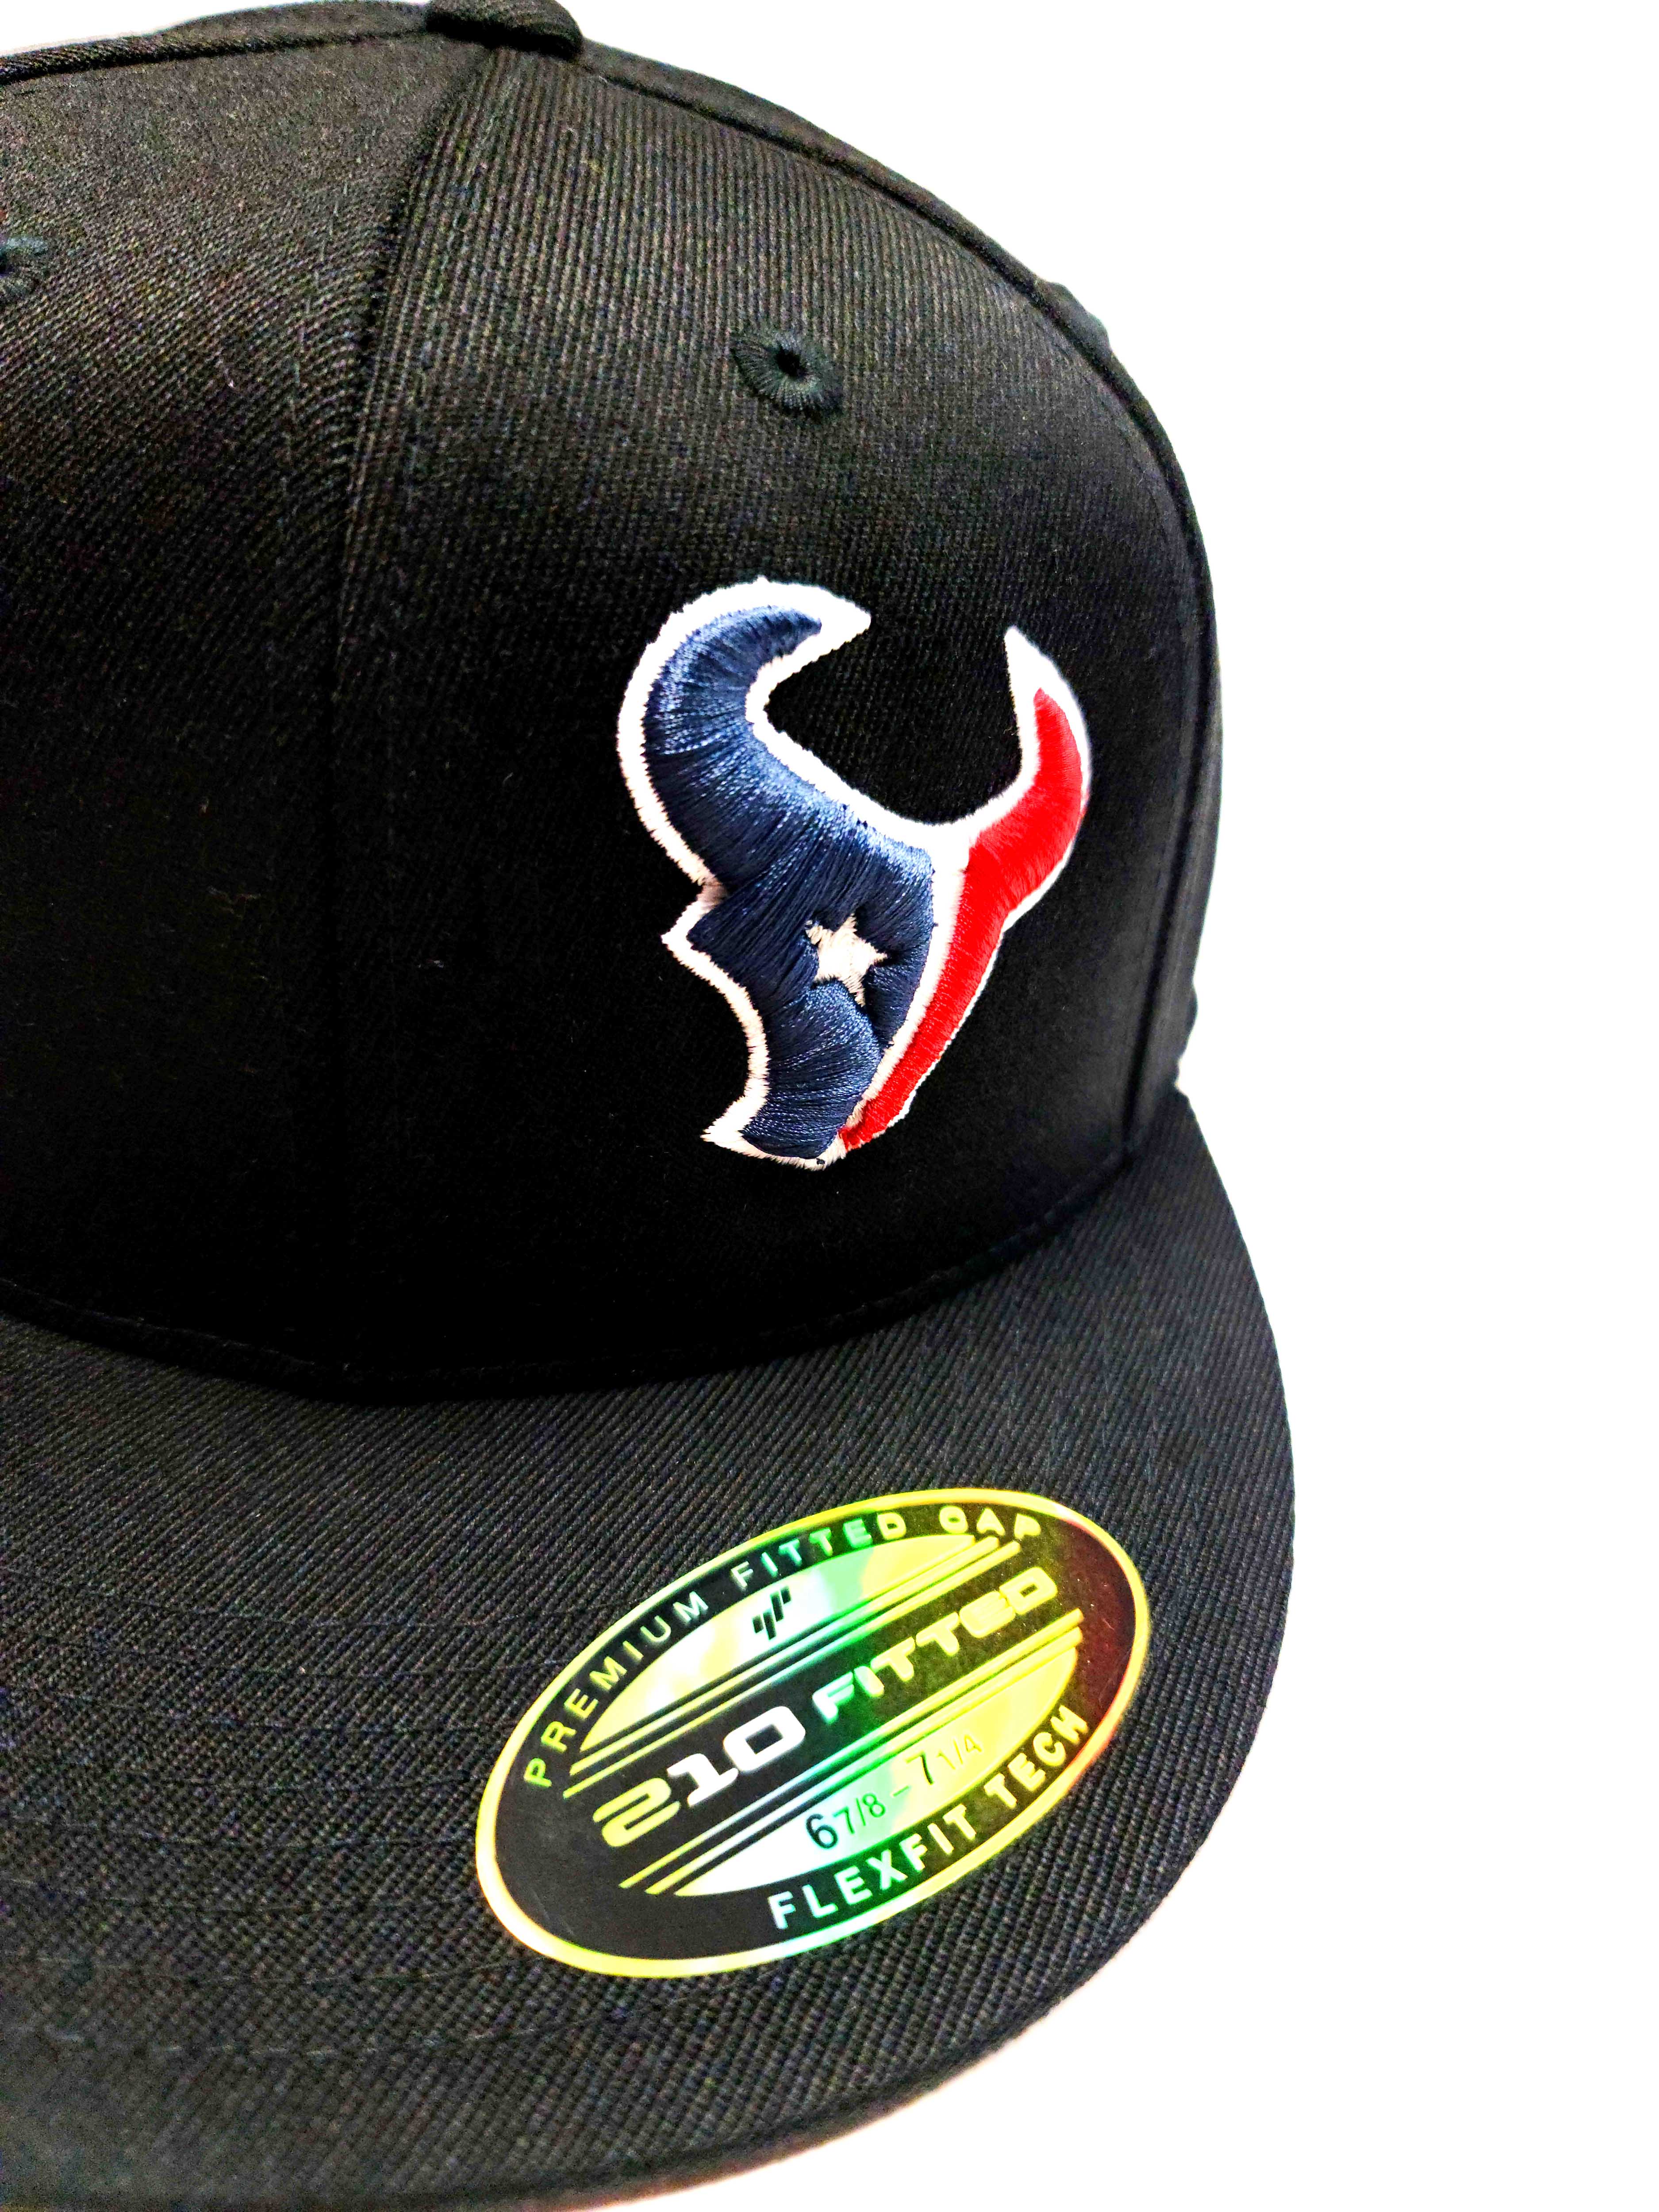 Houston Texans Puff logo close up